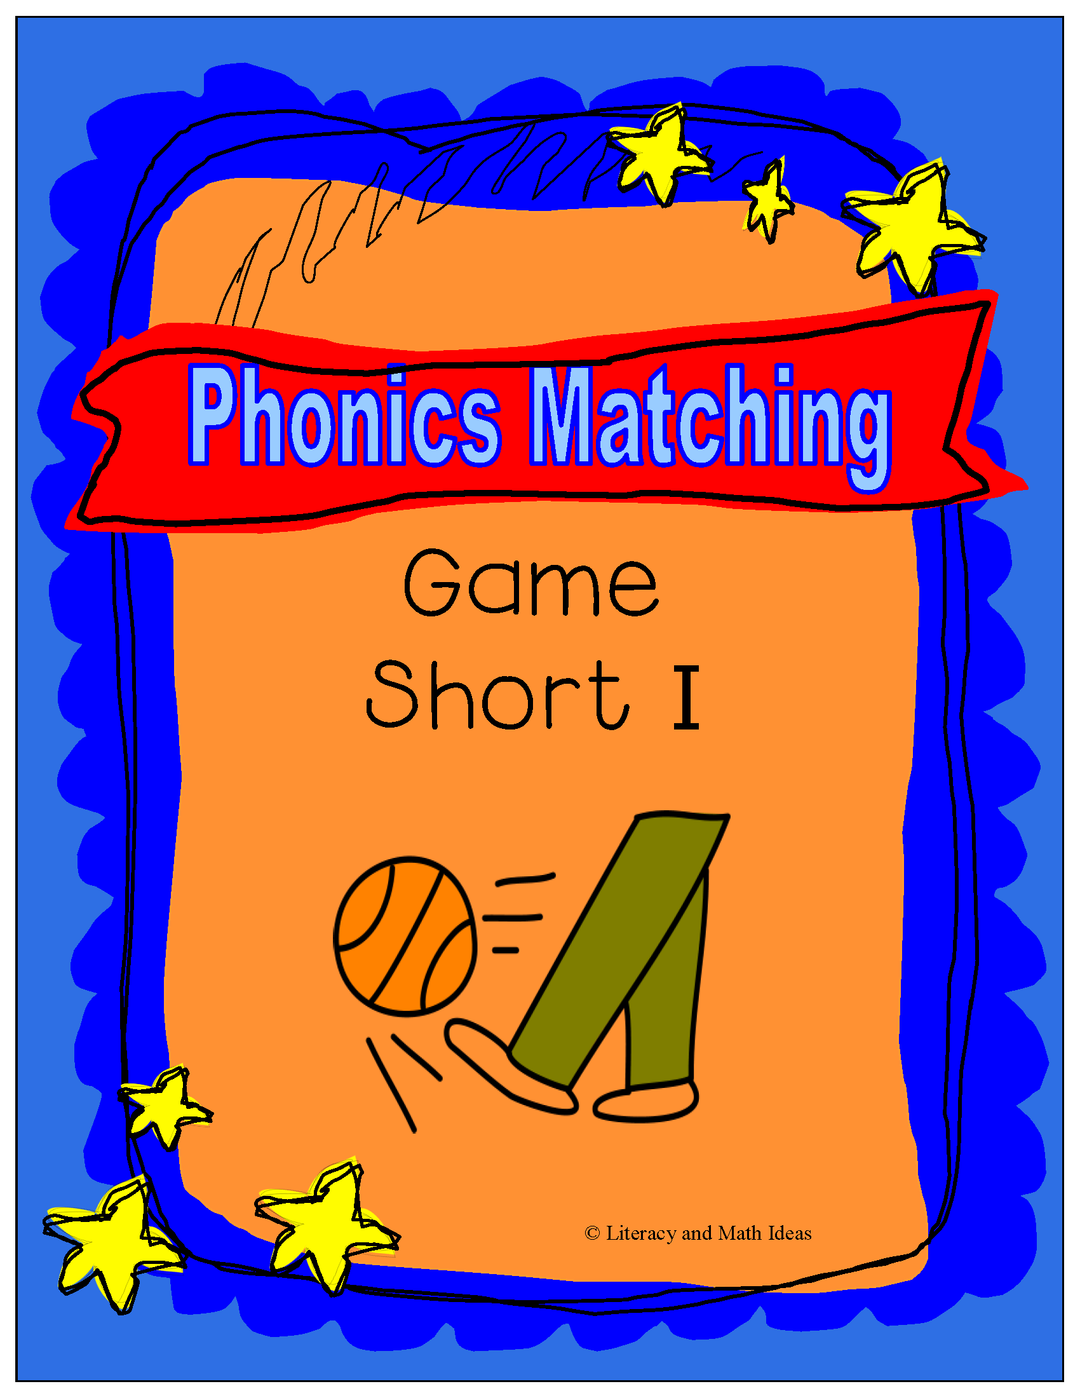 Phonics Matching Game (Short I Sound)